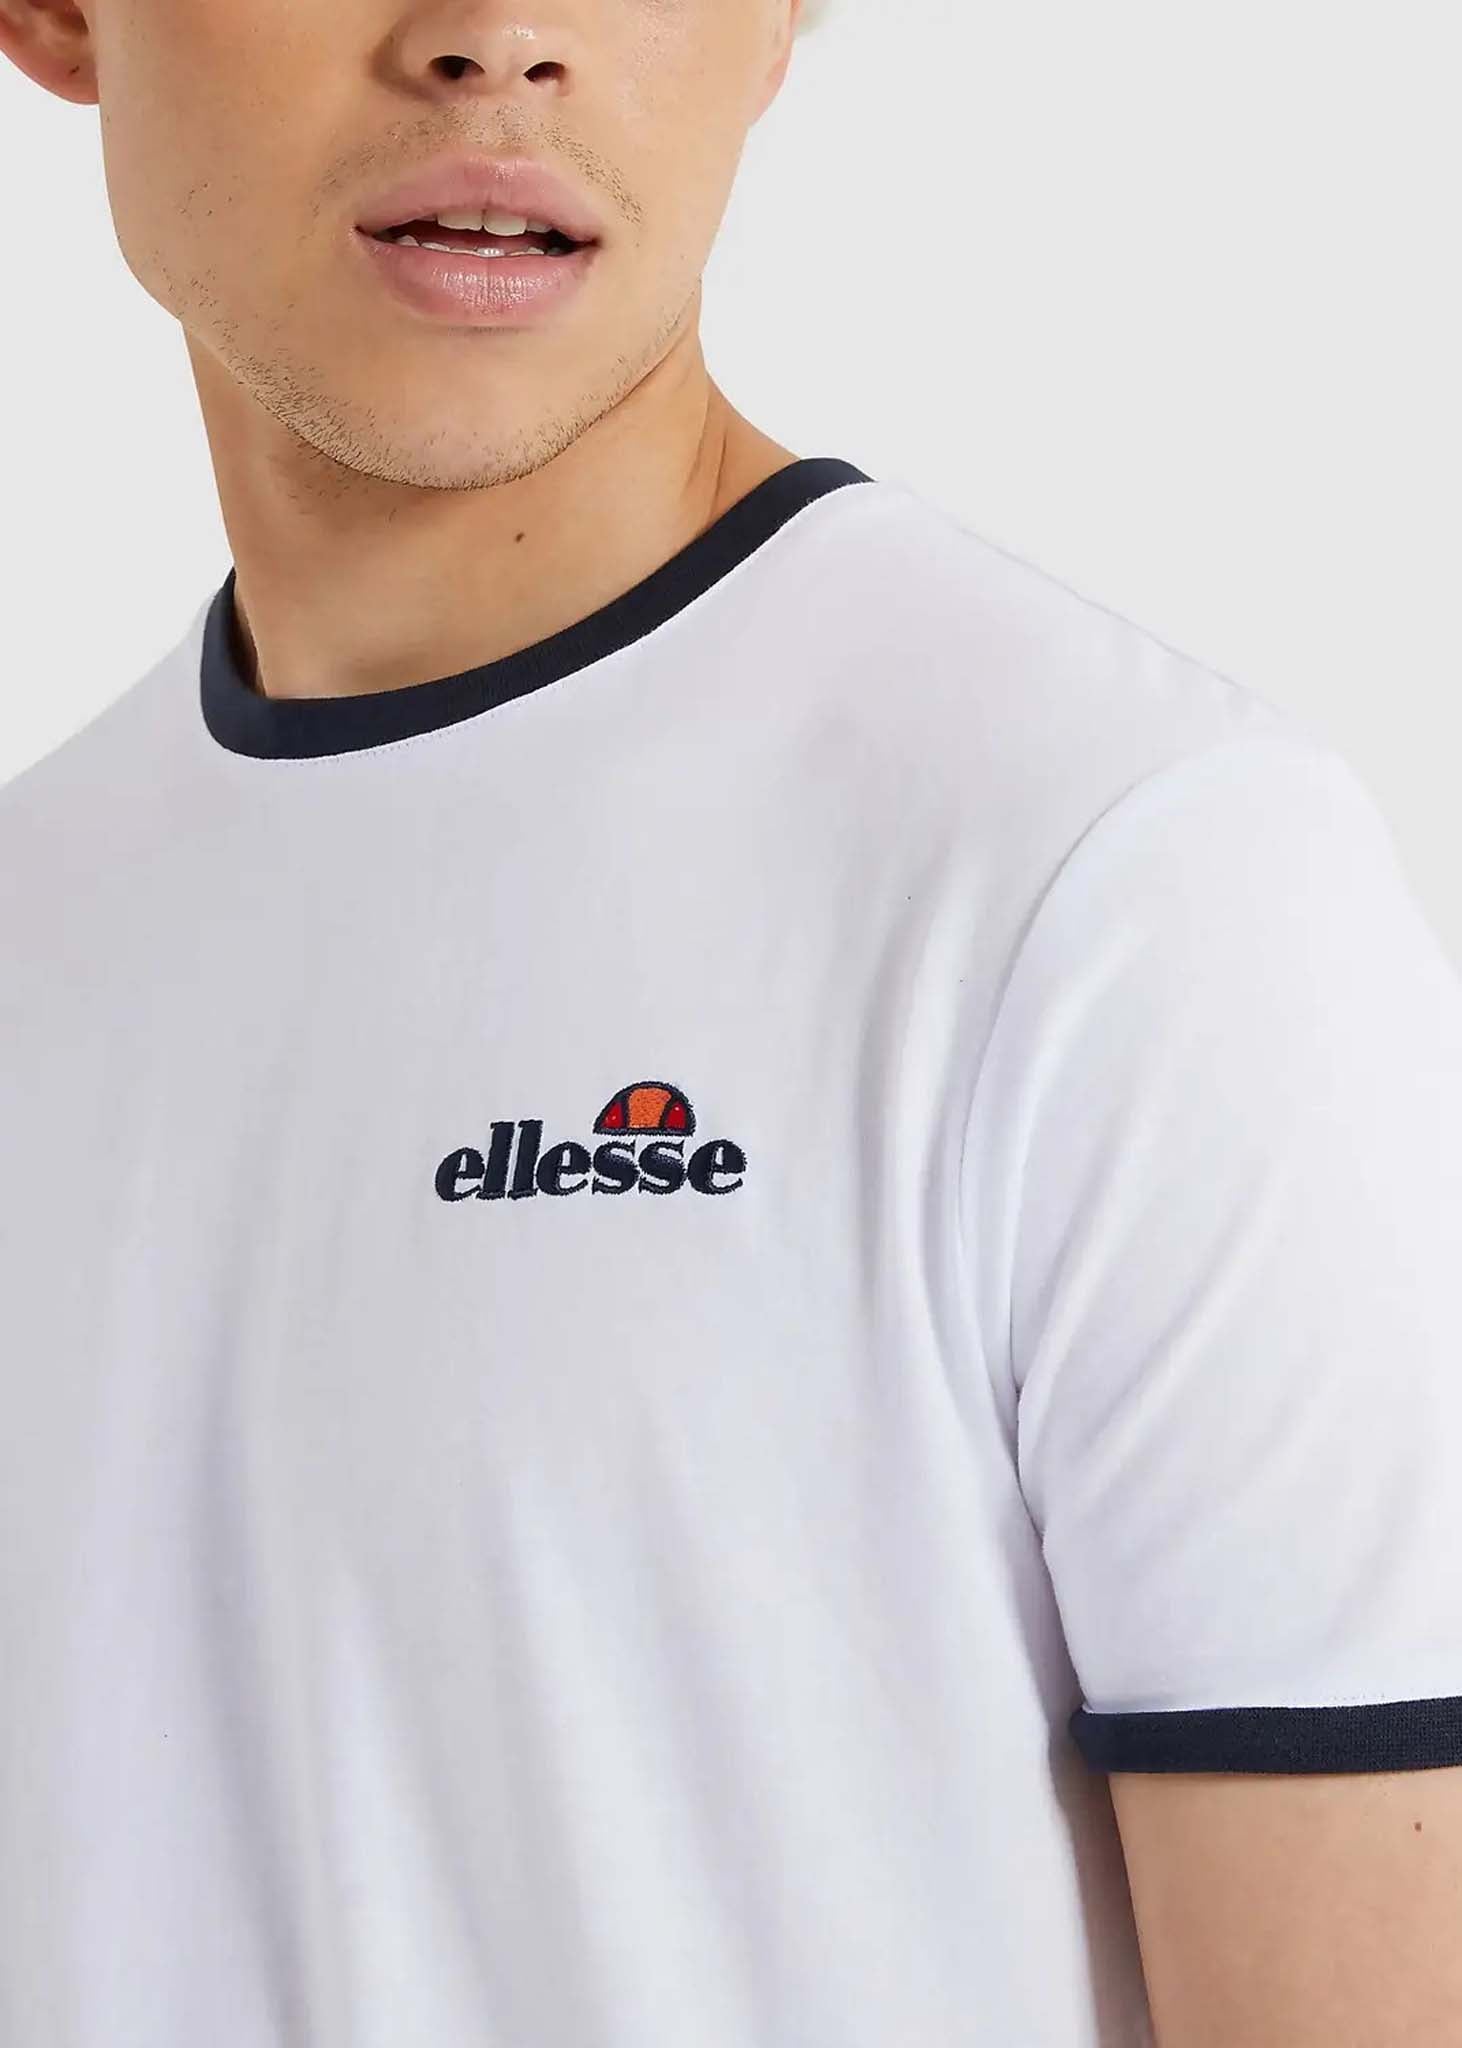 Ellesse T-shirts  Meduno tee - white 